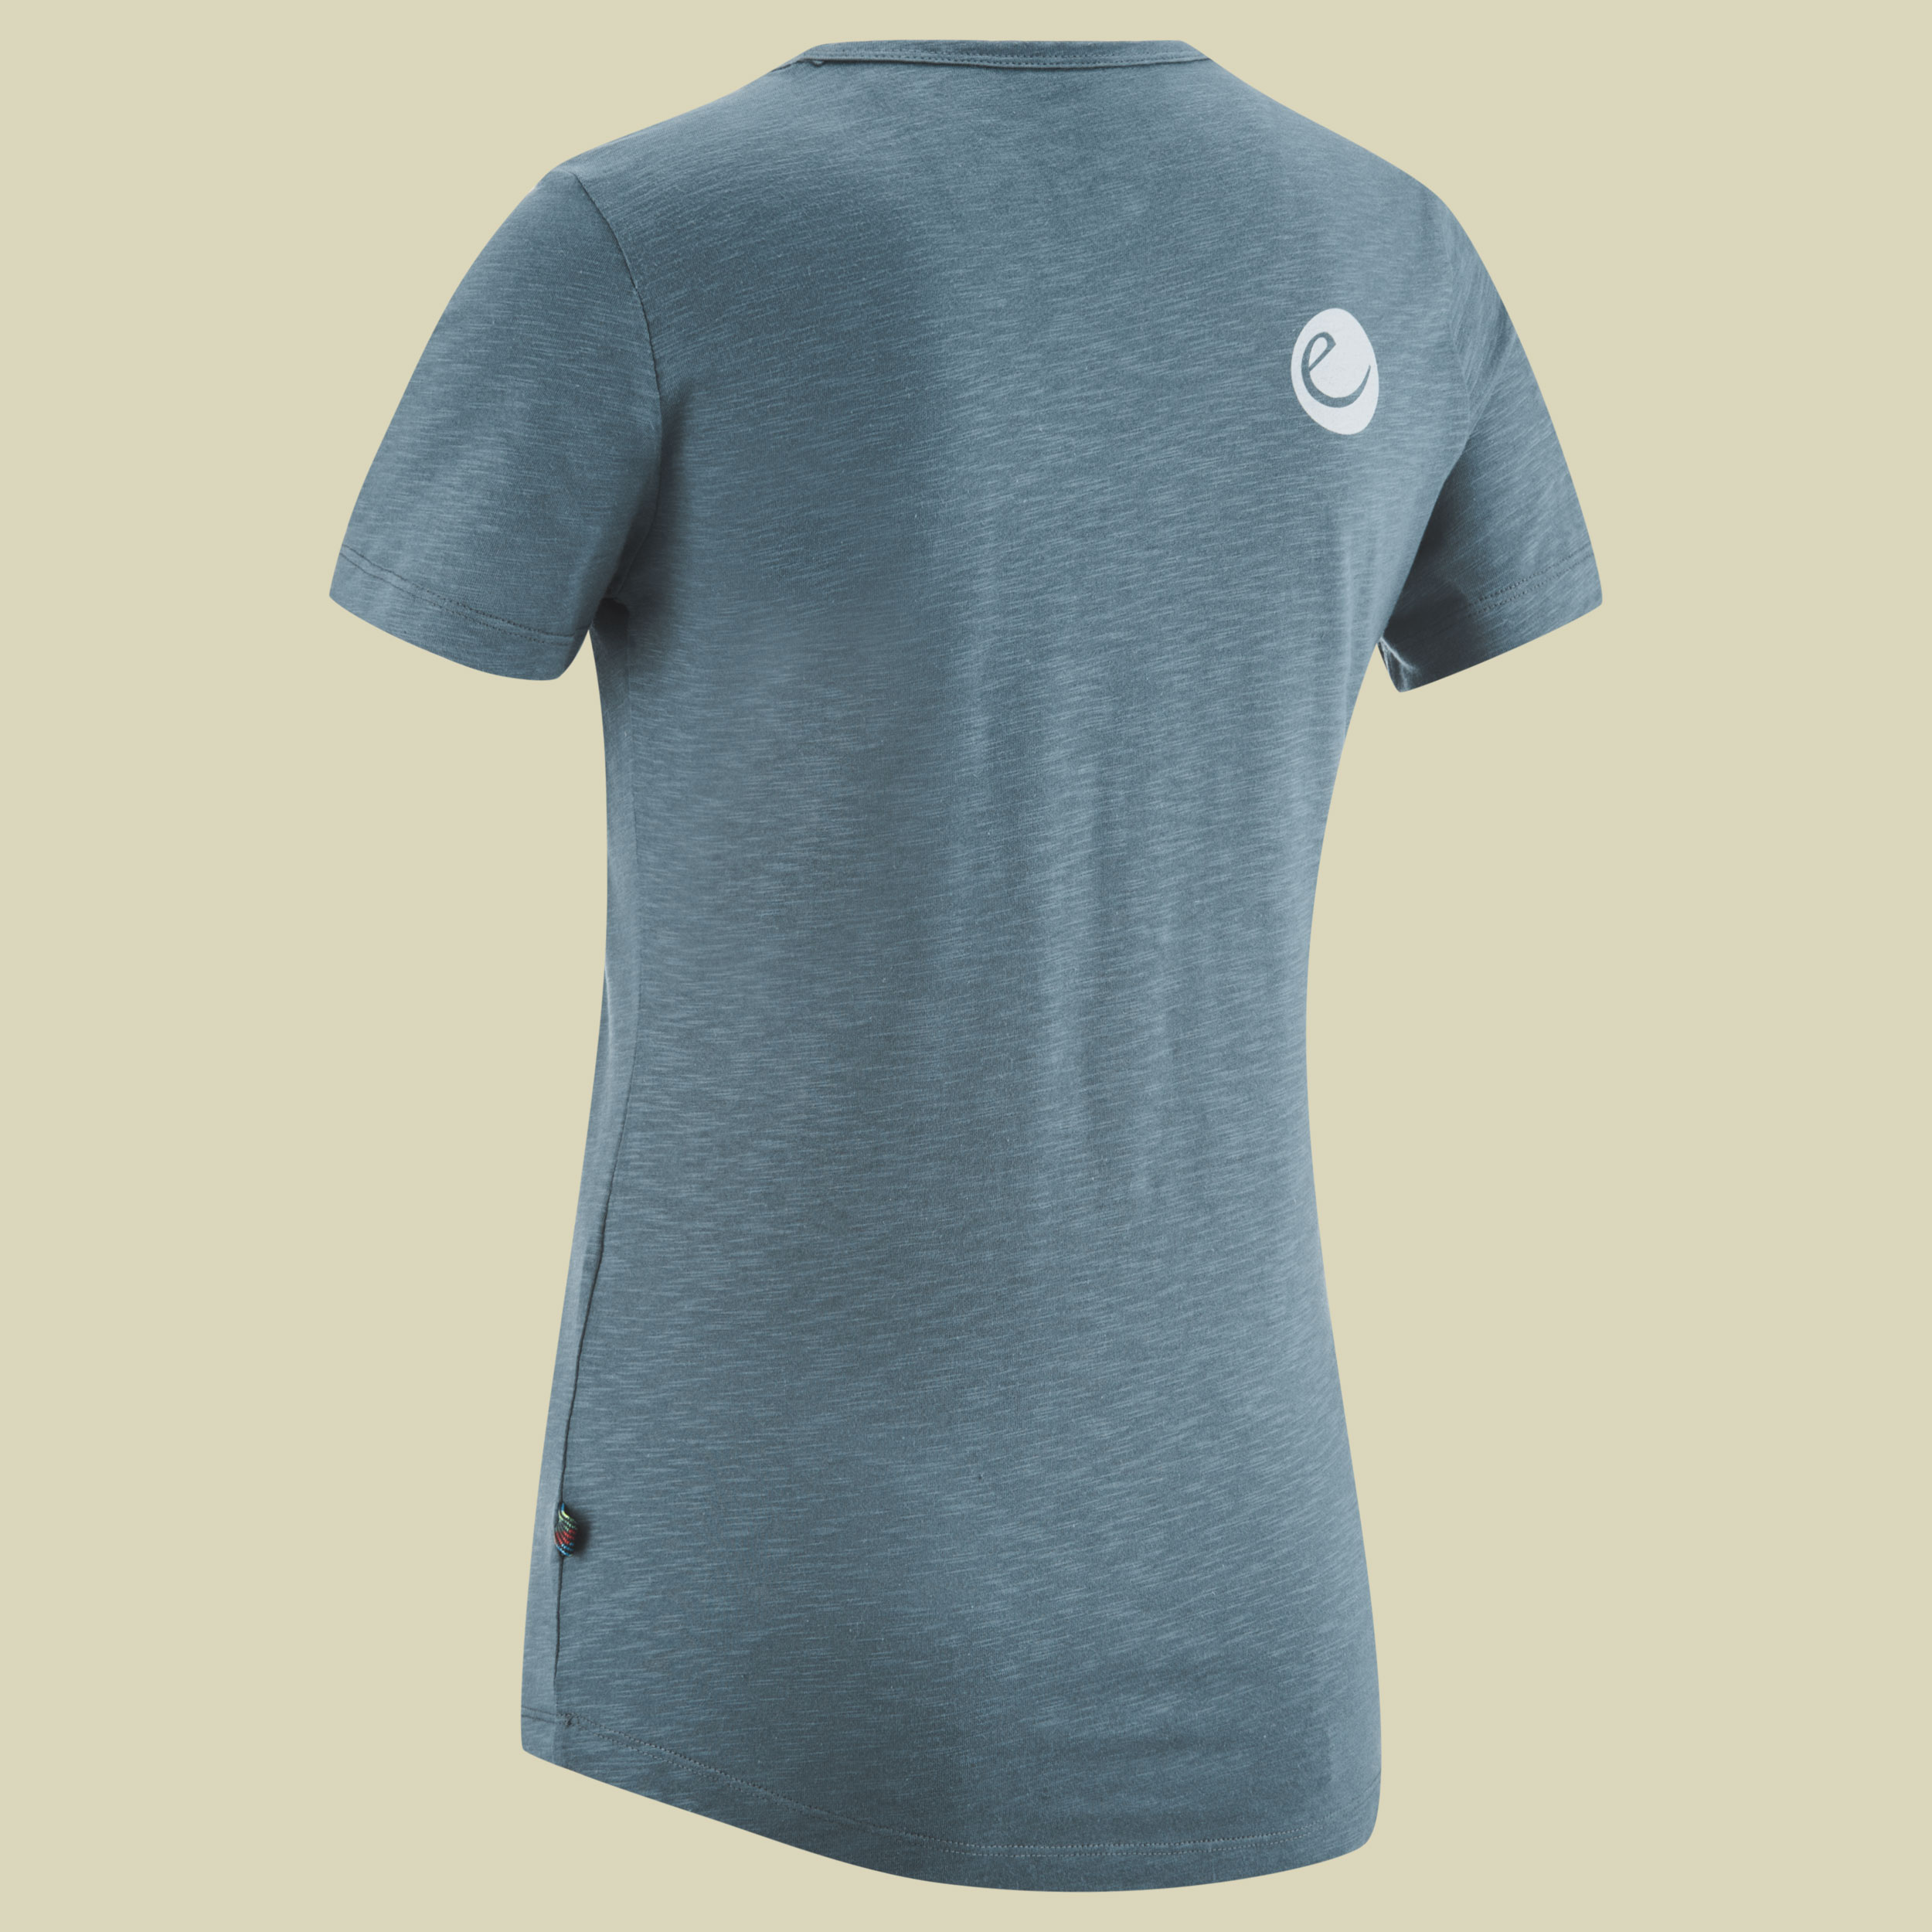 Highball T-Shirt IV Women Größe L  Farbe orion blue